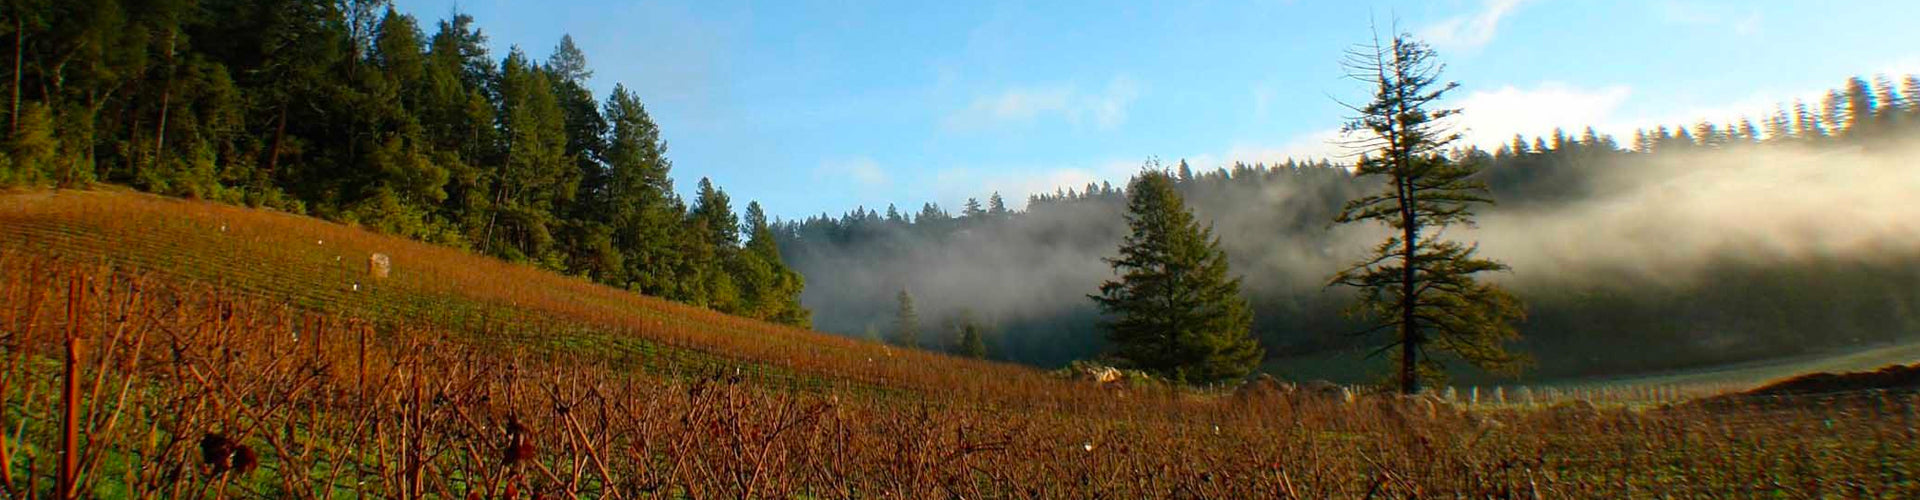 Hundred Acre Vineyards in Napa Valley, California